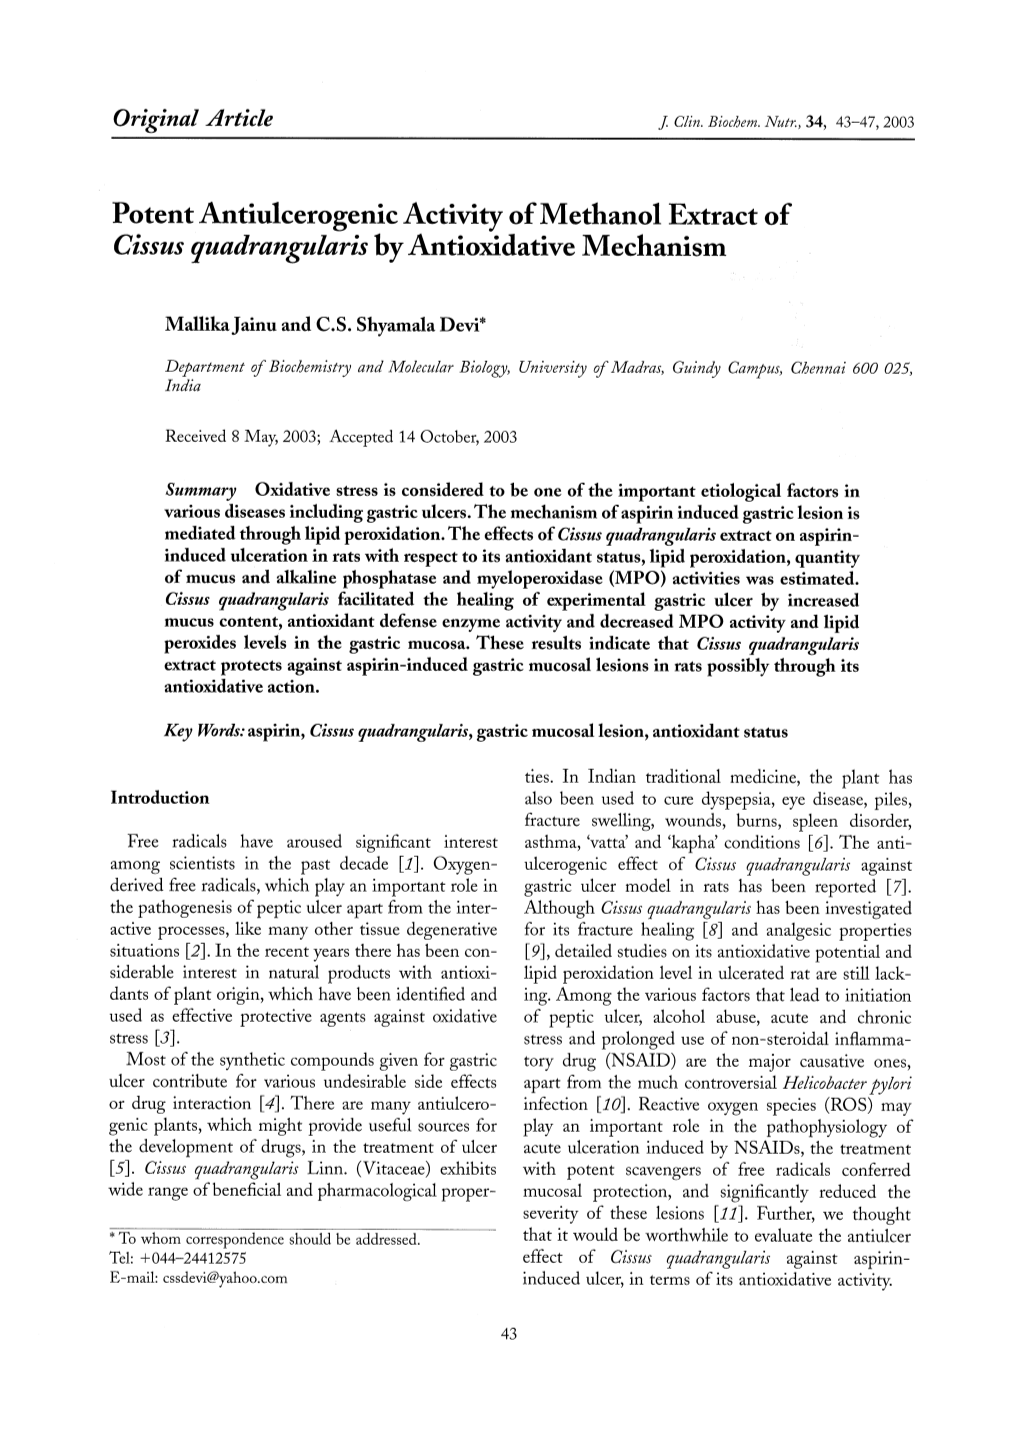 Potent Antiulcerogenic Activity of Methanol Extract of Cissus Quadrangularis by Antioxidative Mechanism